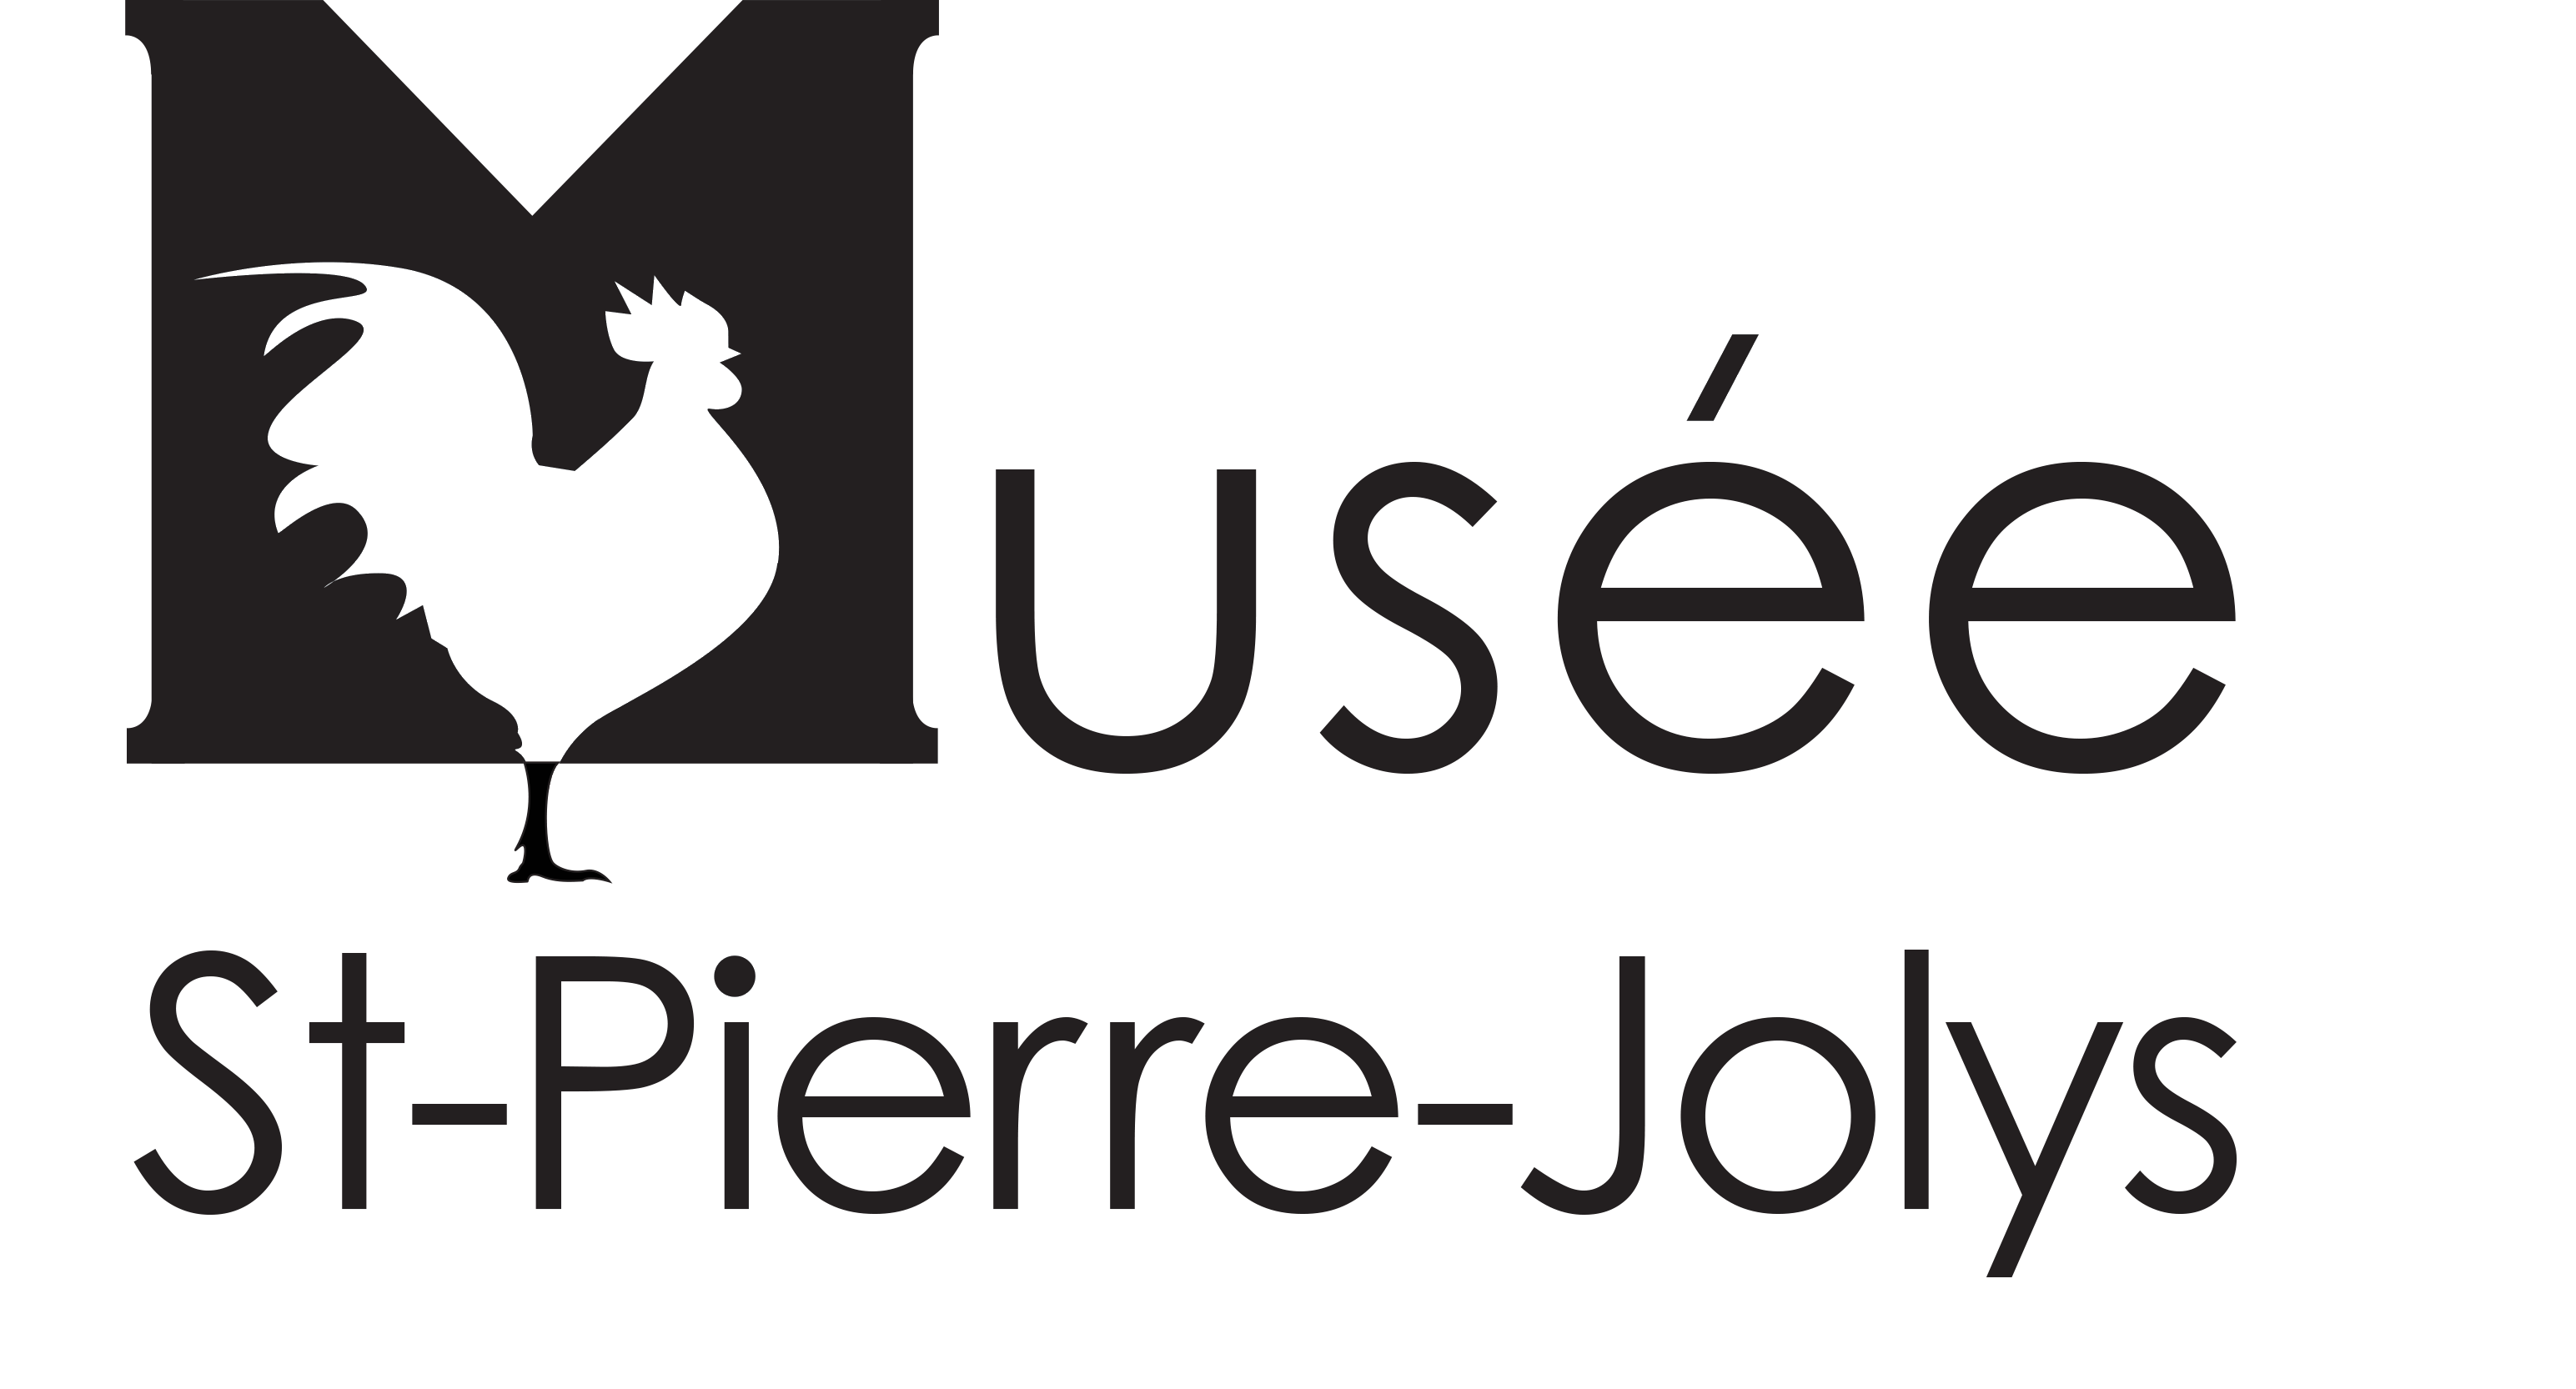 St-Pierre-Jolys Museum